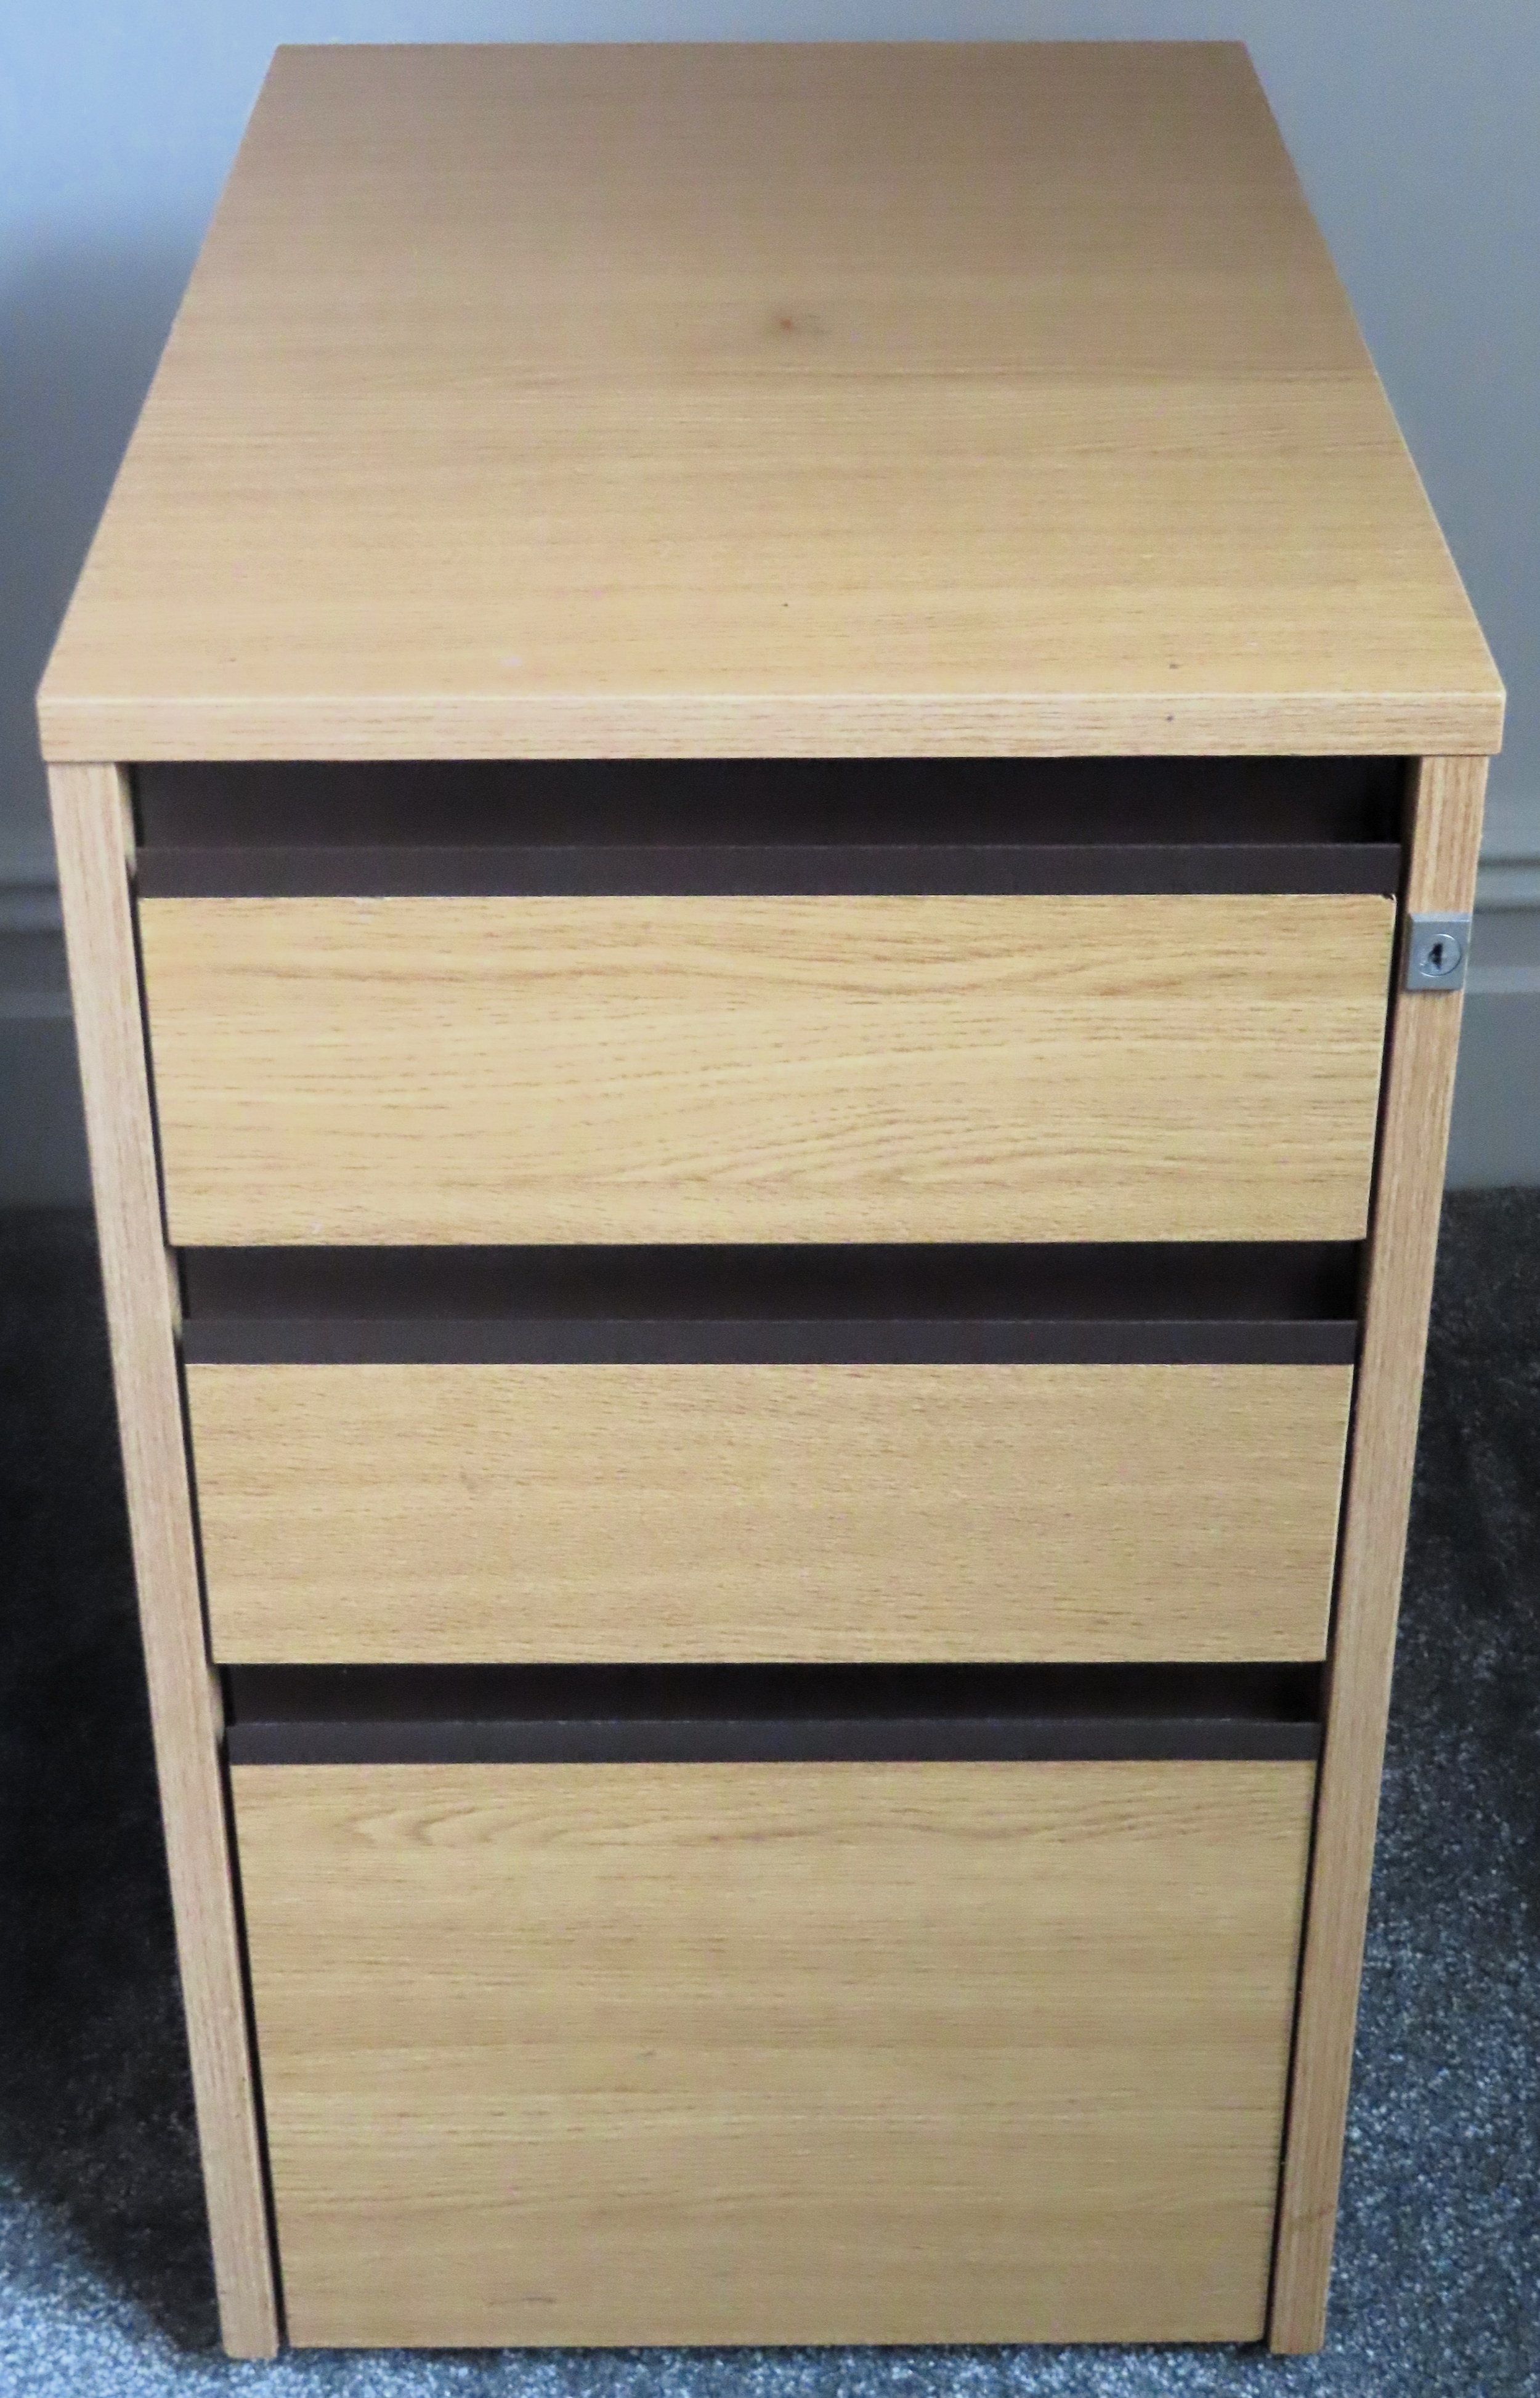 20th century light oak three drawer filing cabinet. Approx. 65cm H x 39cm W x 63cm D